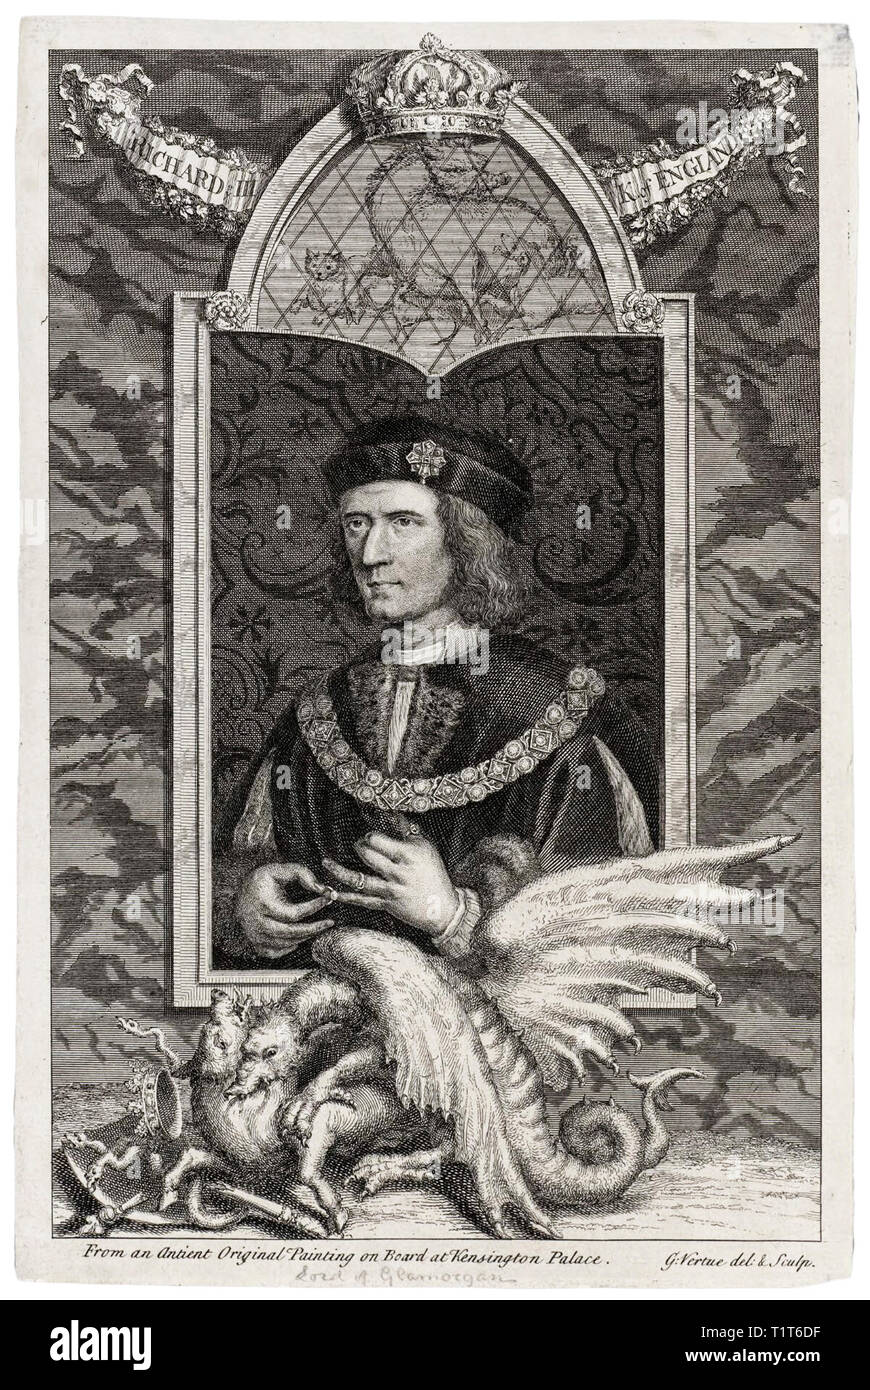 Richard III (1452-1485) portrait engraving, 1732, George Vertue Stock Photo